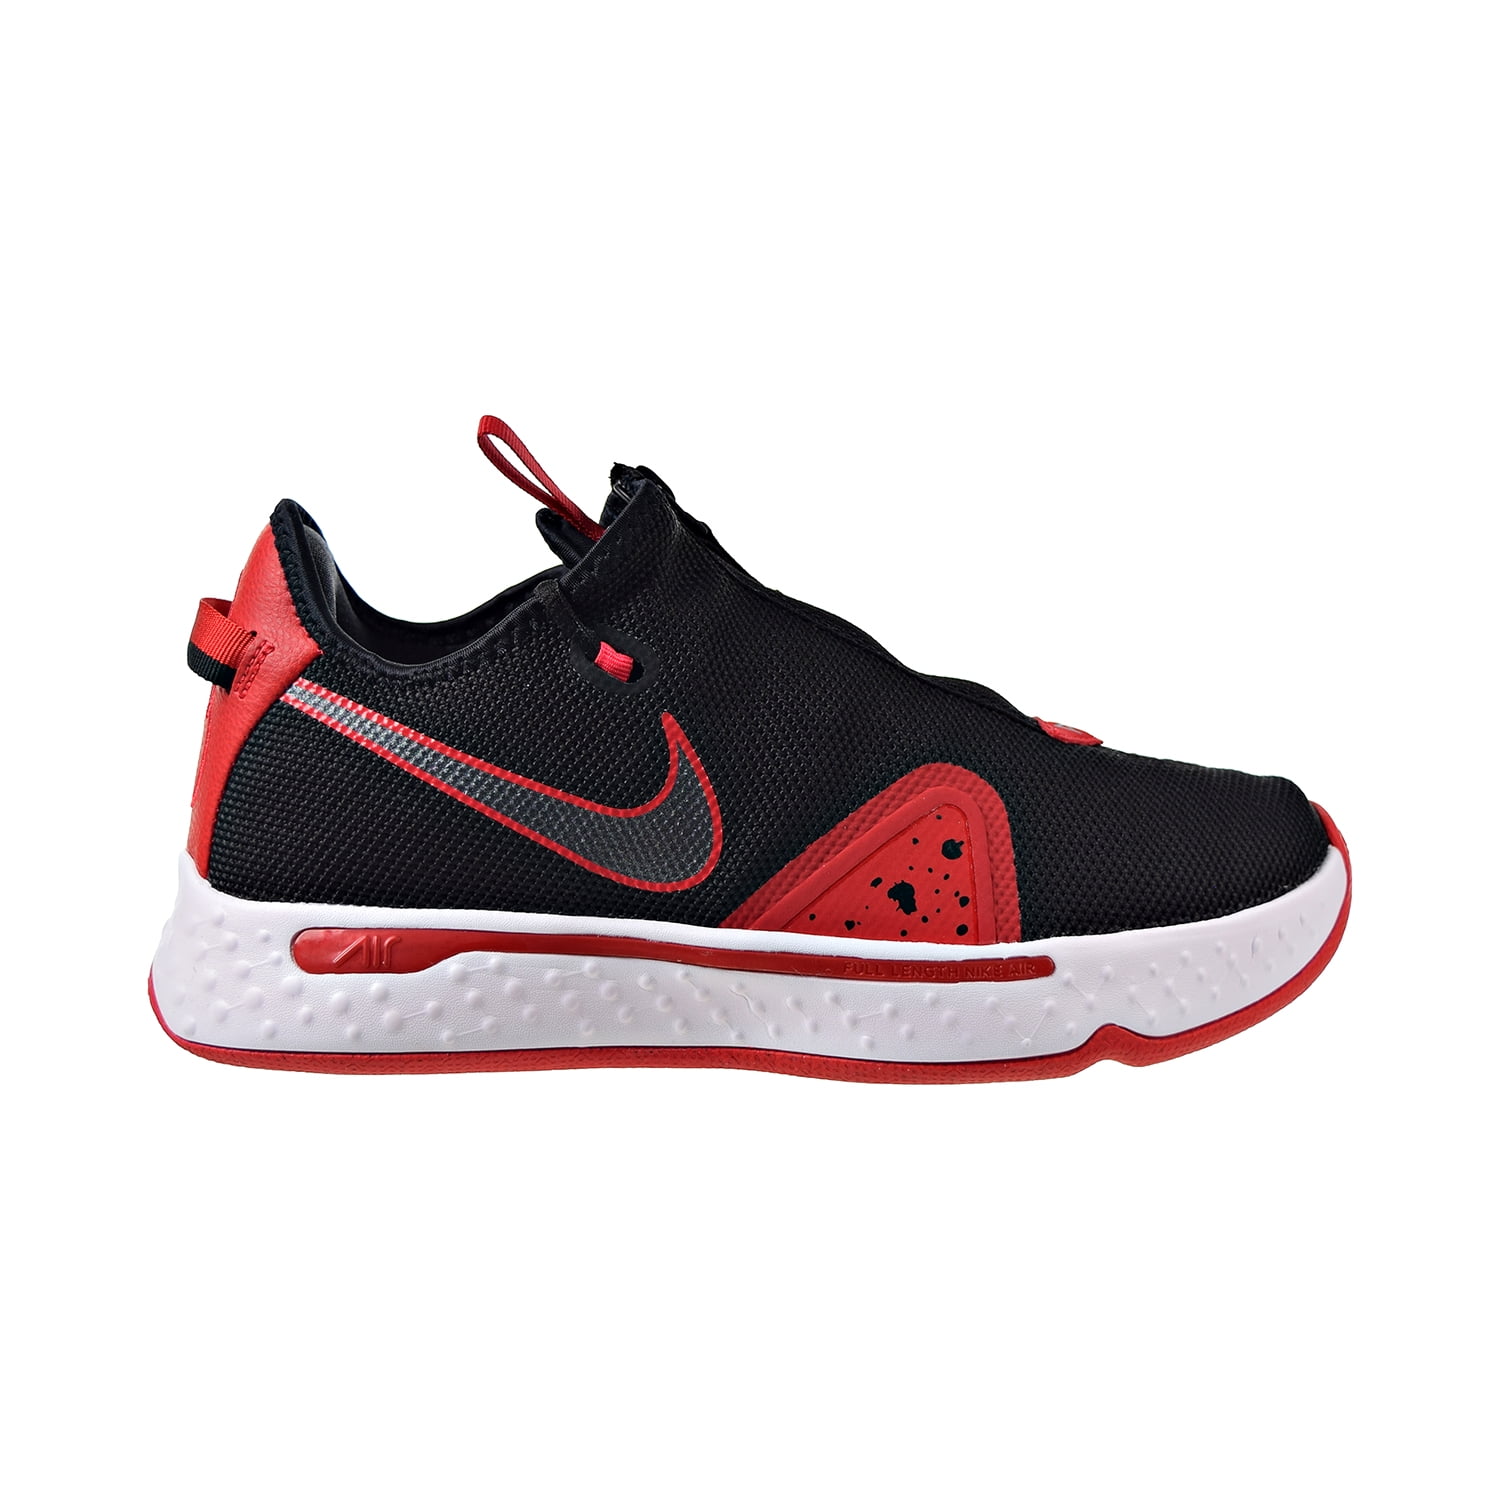 hoesten Efficiënt hout Nike PG 4 Basketball Men's Shoes Black-University Red-White cd5079-003 -  Walmart.com